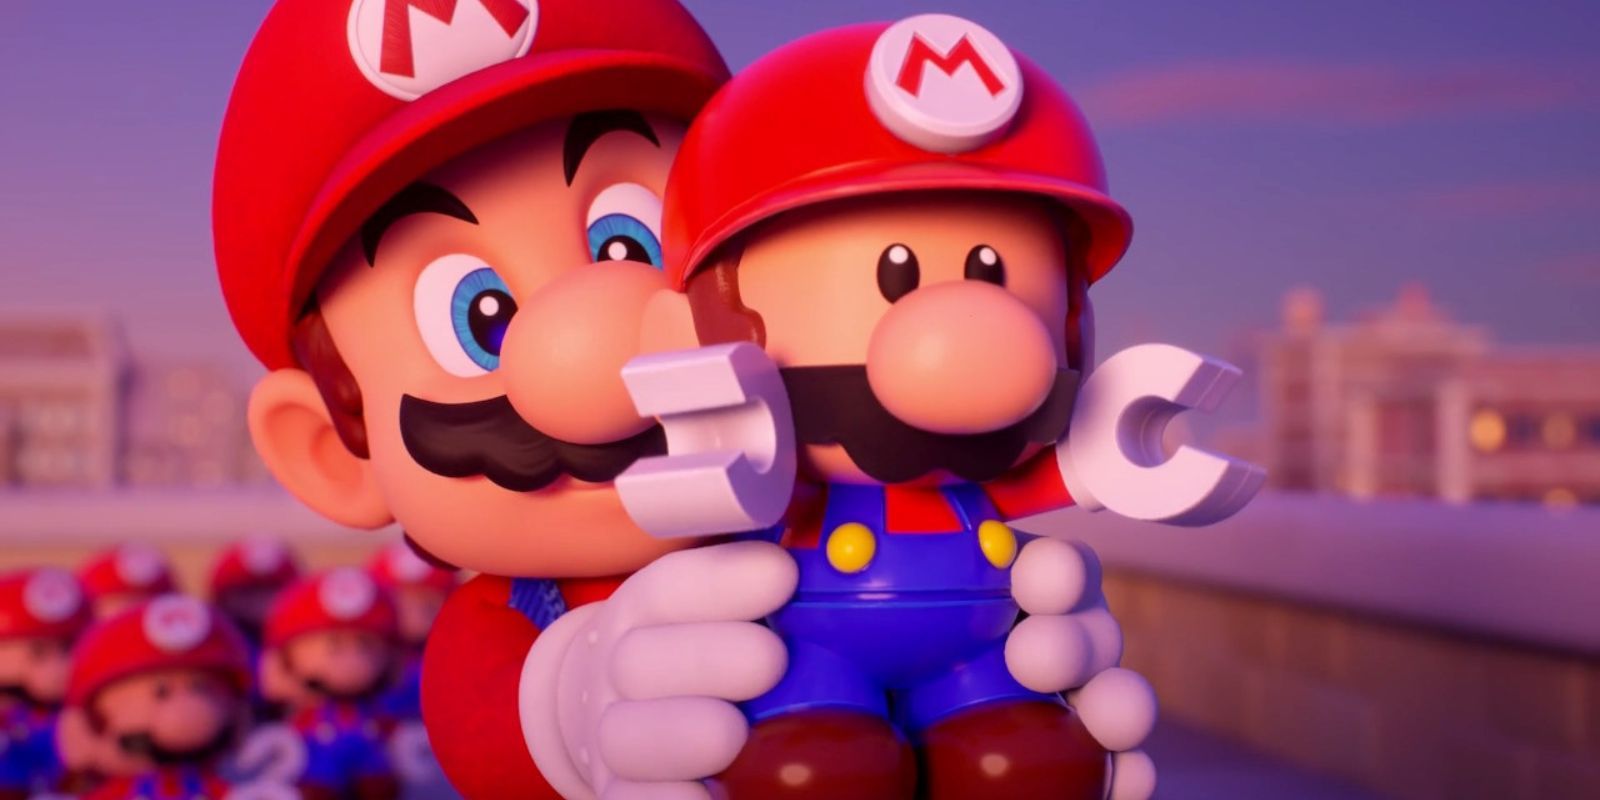 Mario holding a Mini Mario Toy for Mario Vs Donkey Kong Remake